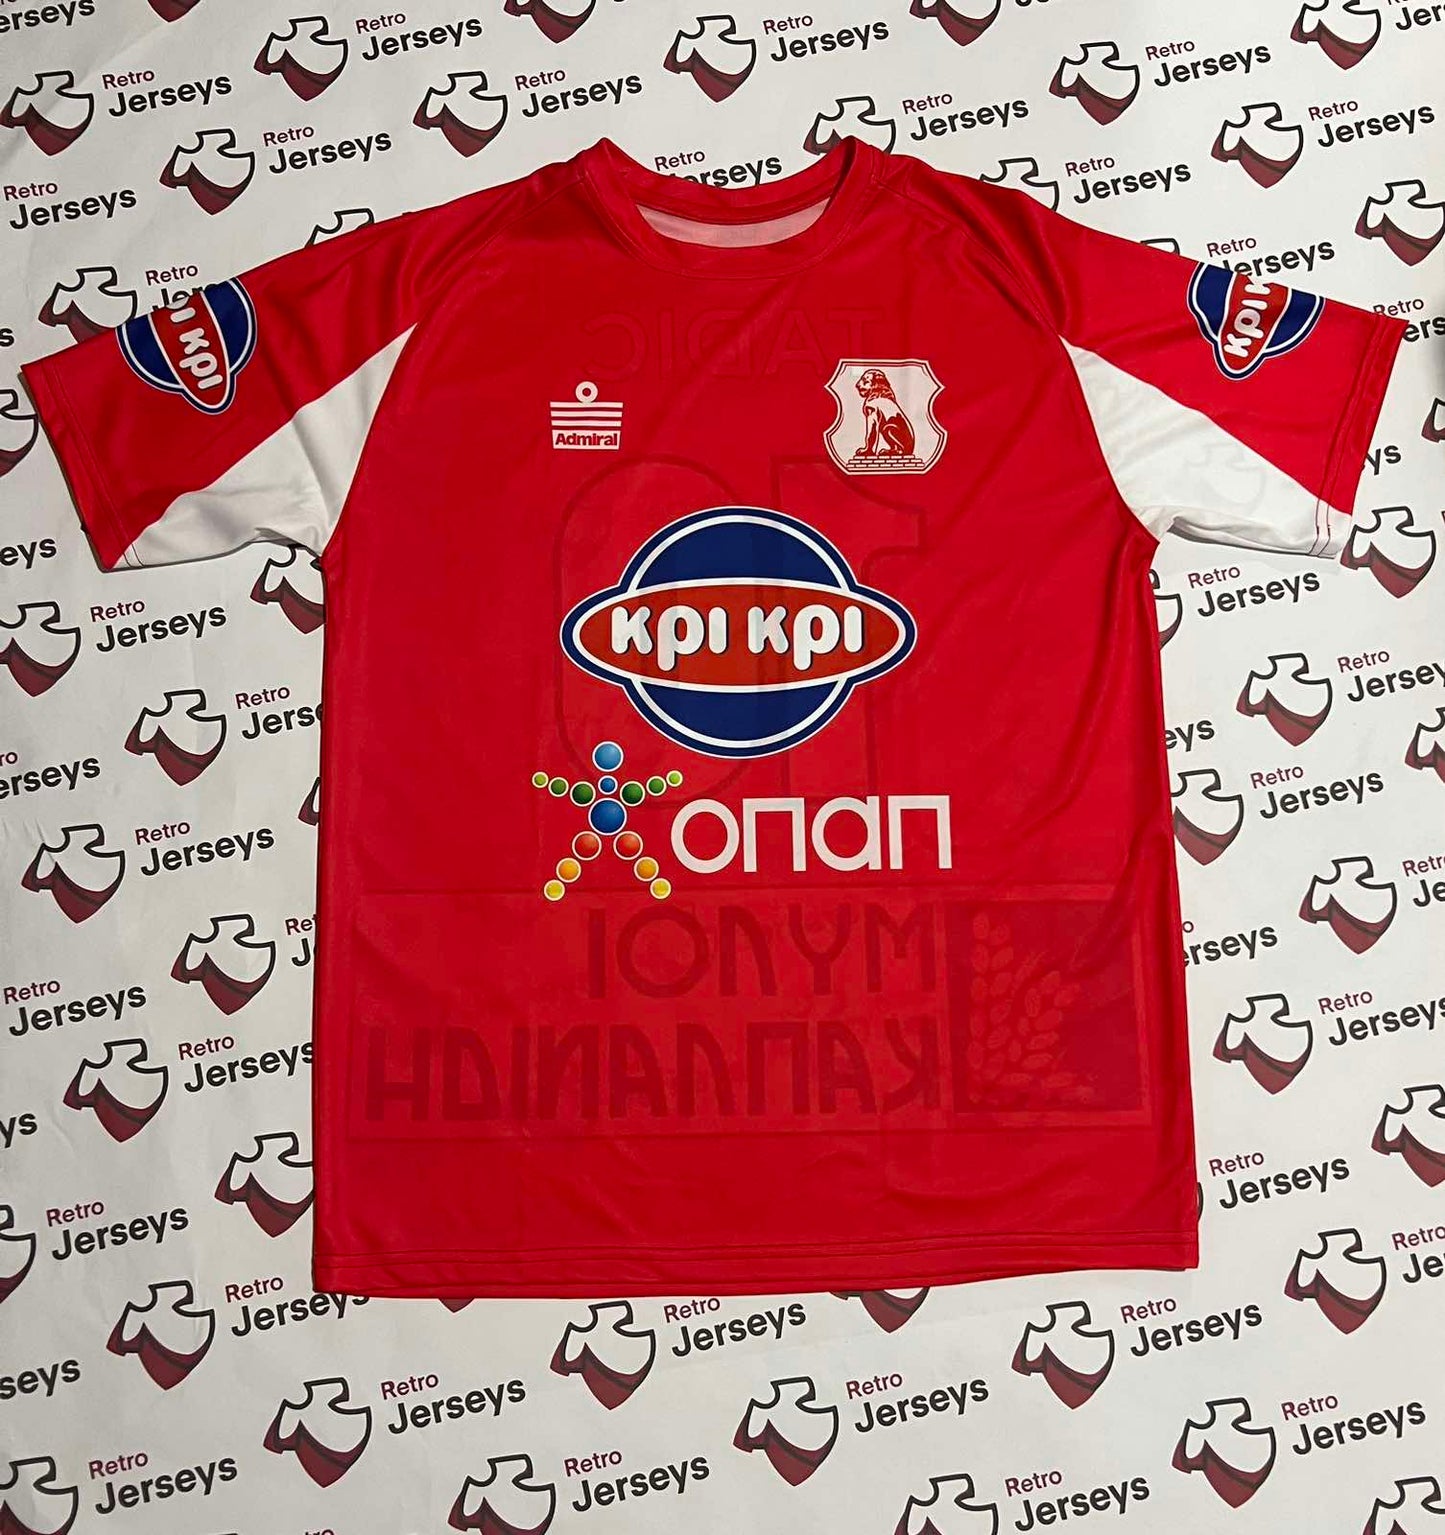 Panserraikos Shirt 2007-2008 Home - Retro Jerseys, φανέλα πανσερραϊκός - Retro Jerseys